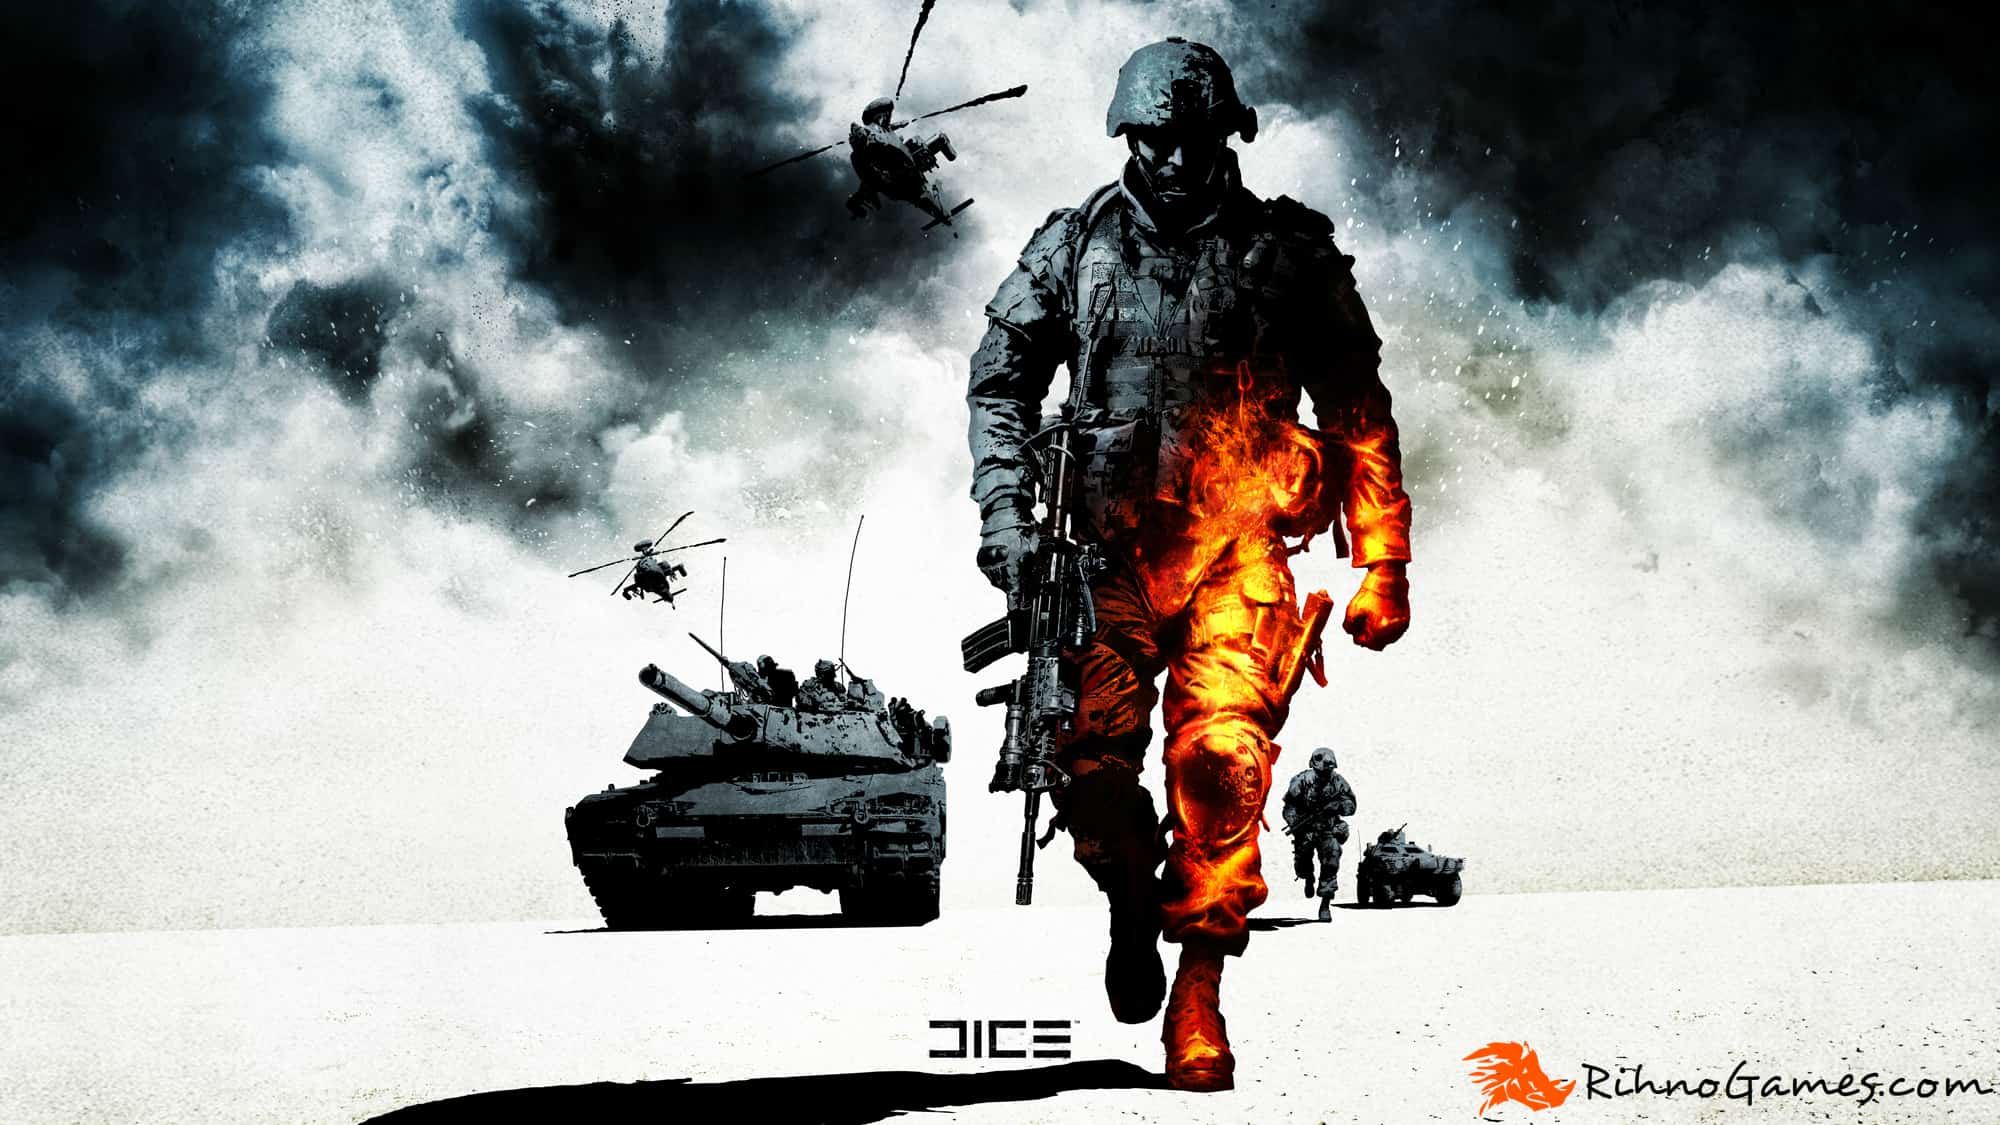 Battlefield Bad Company 2 Download